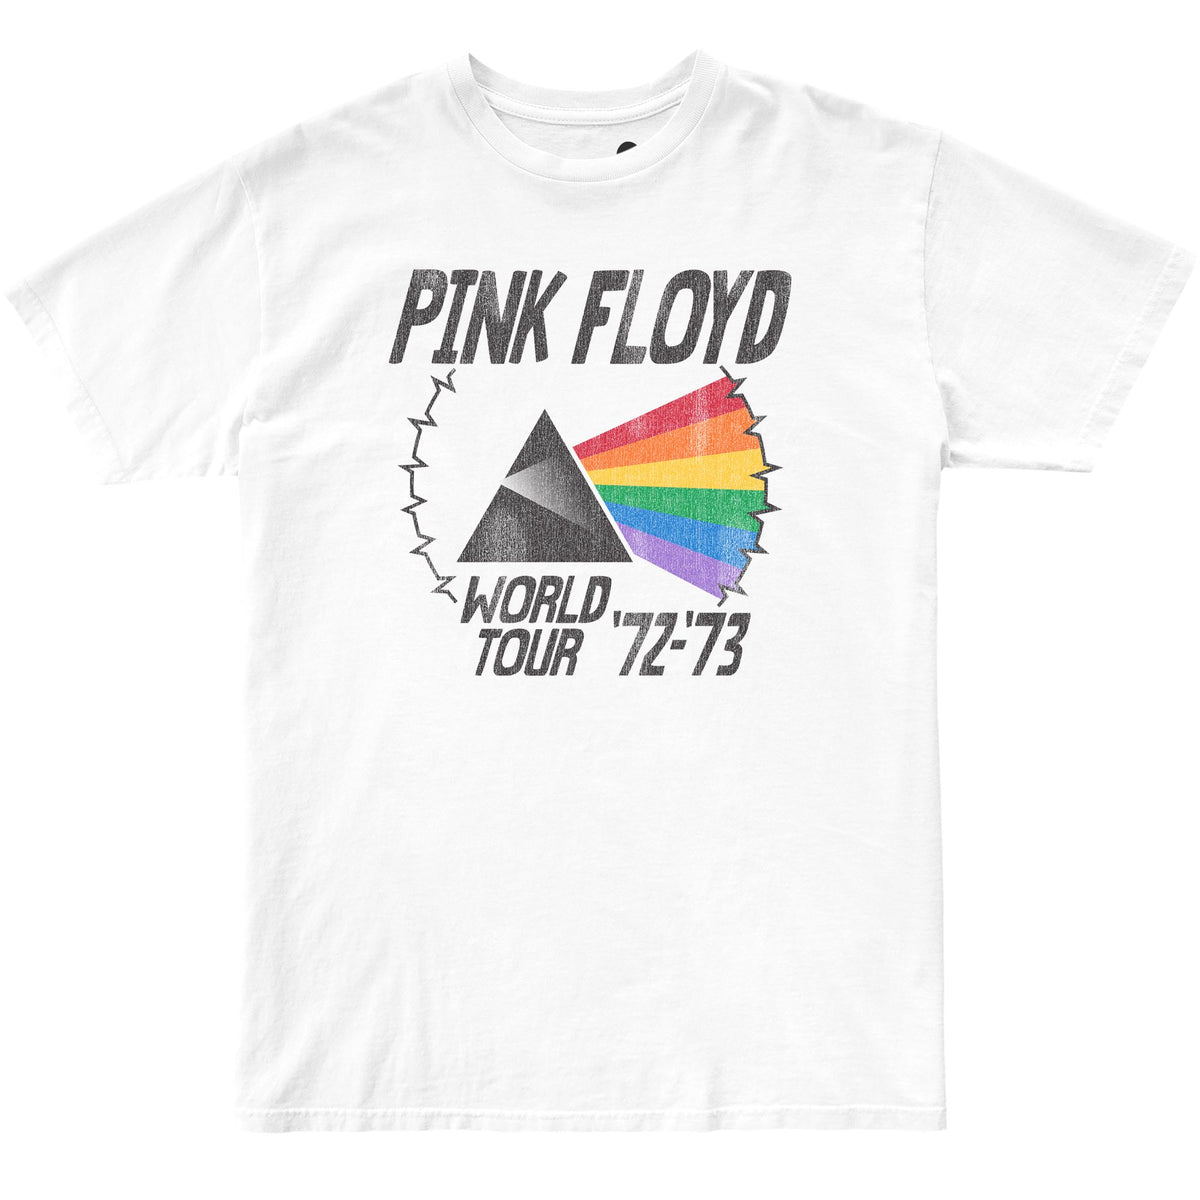 Pink Floyd 100% Cotton Tee